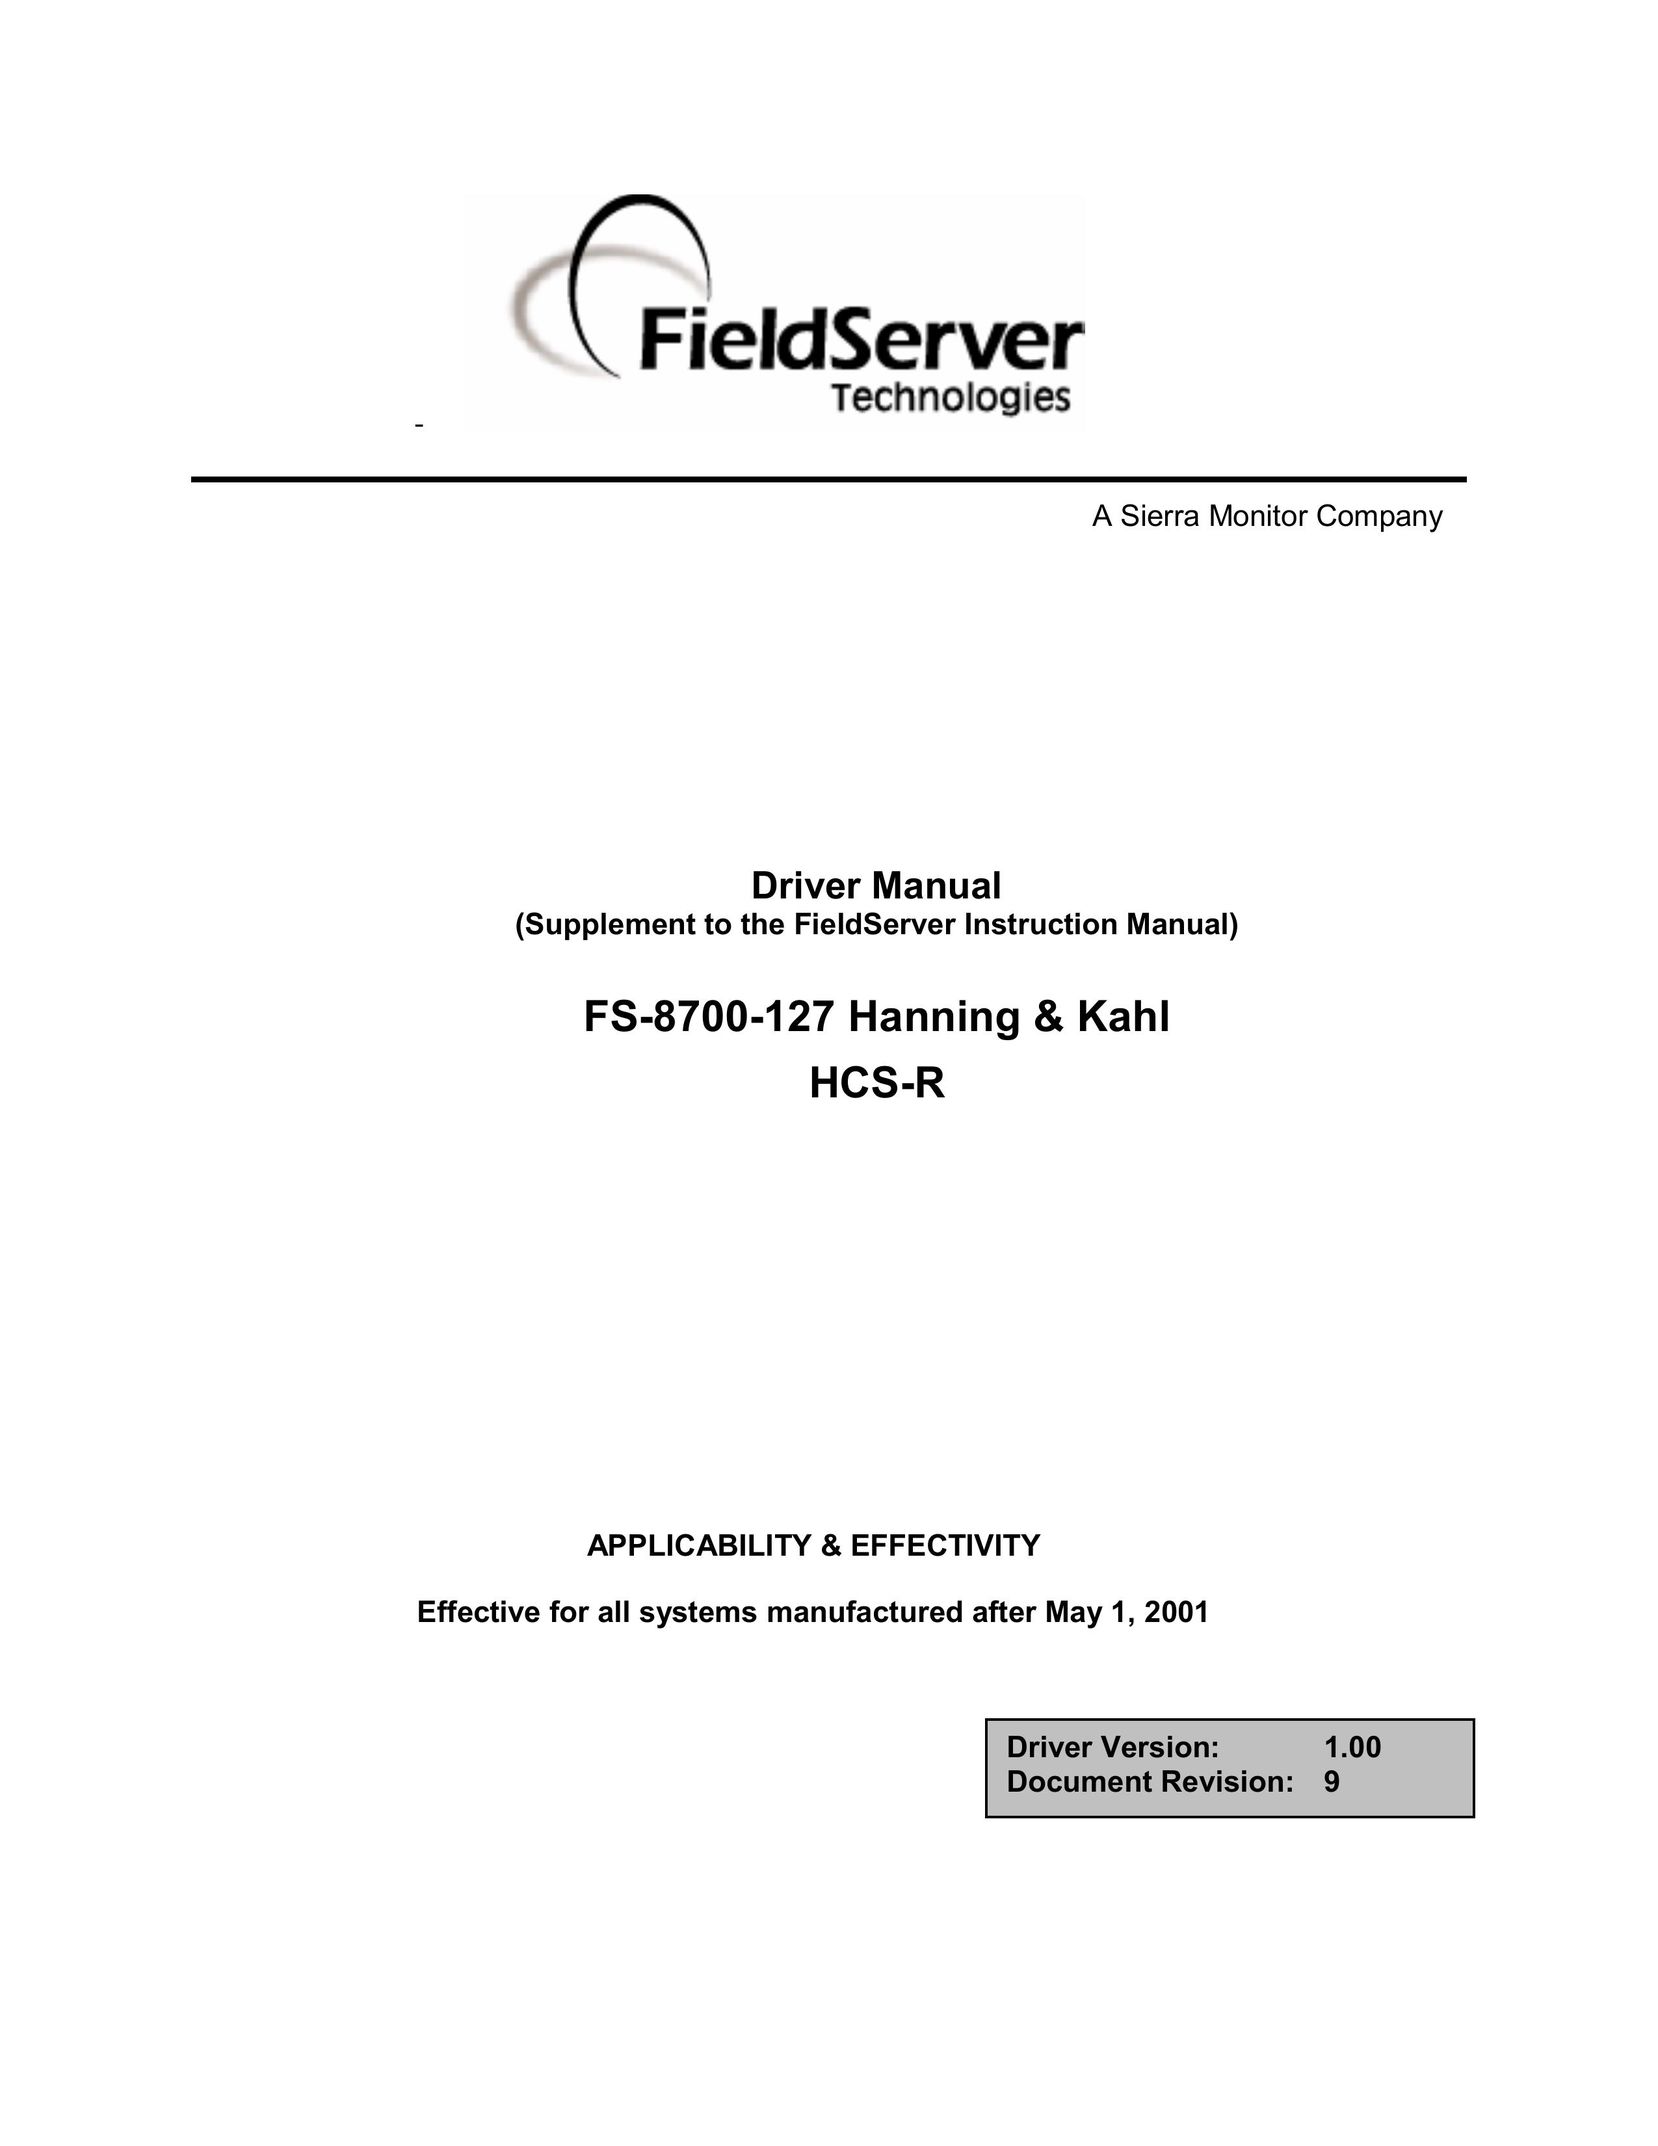 FieldServer FS-8700-127 Computer Drive User Manual